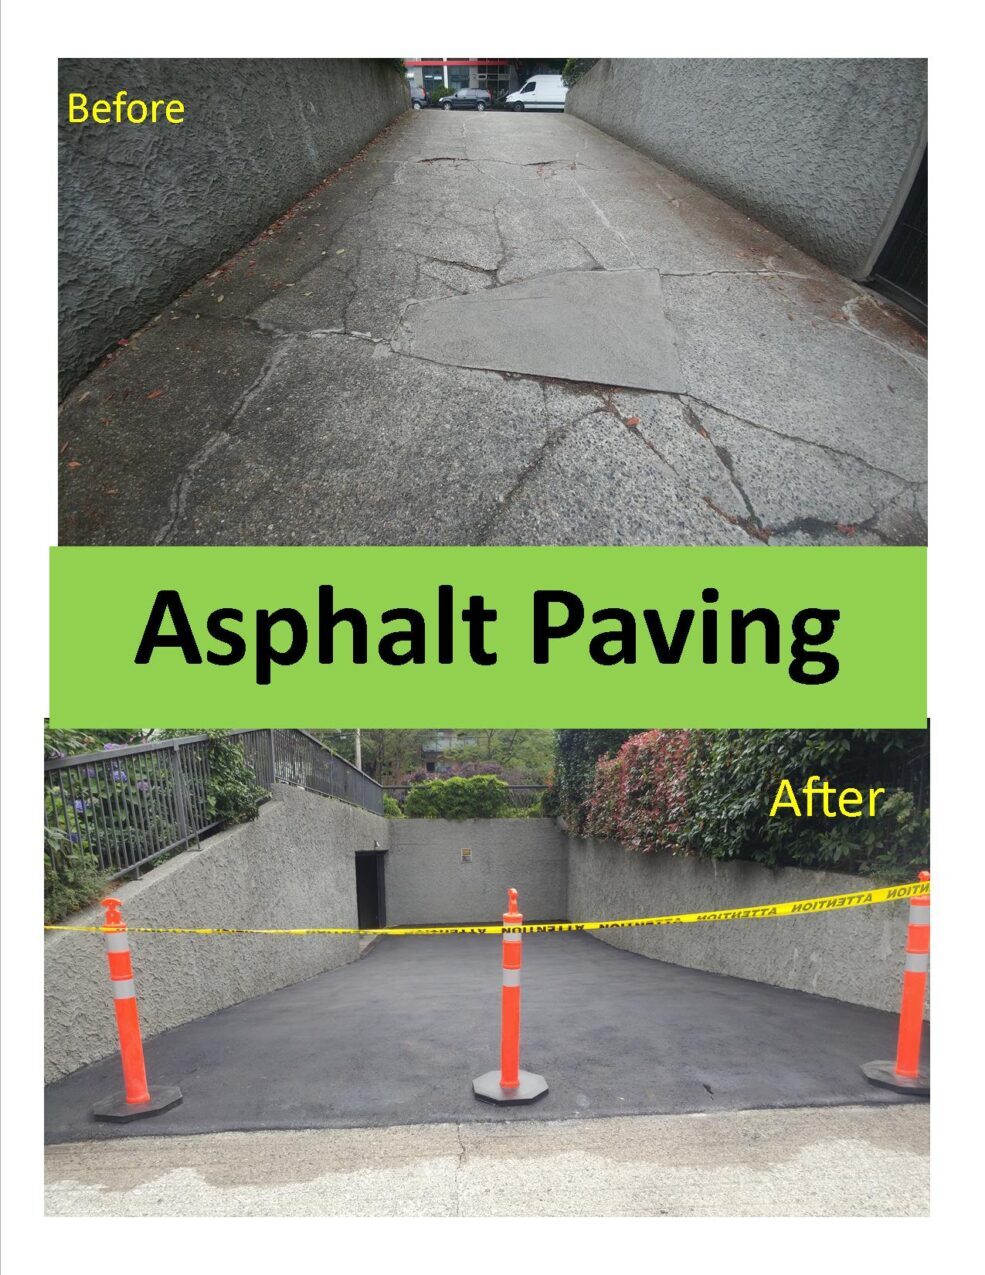 Asphalt Paving- driveway overlay